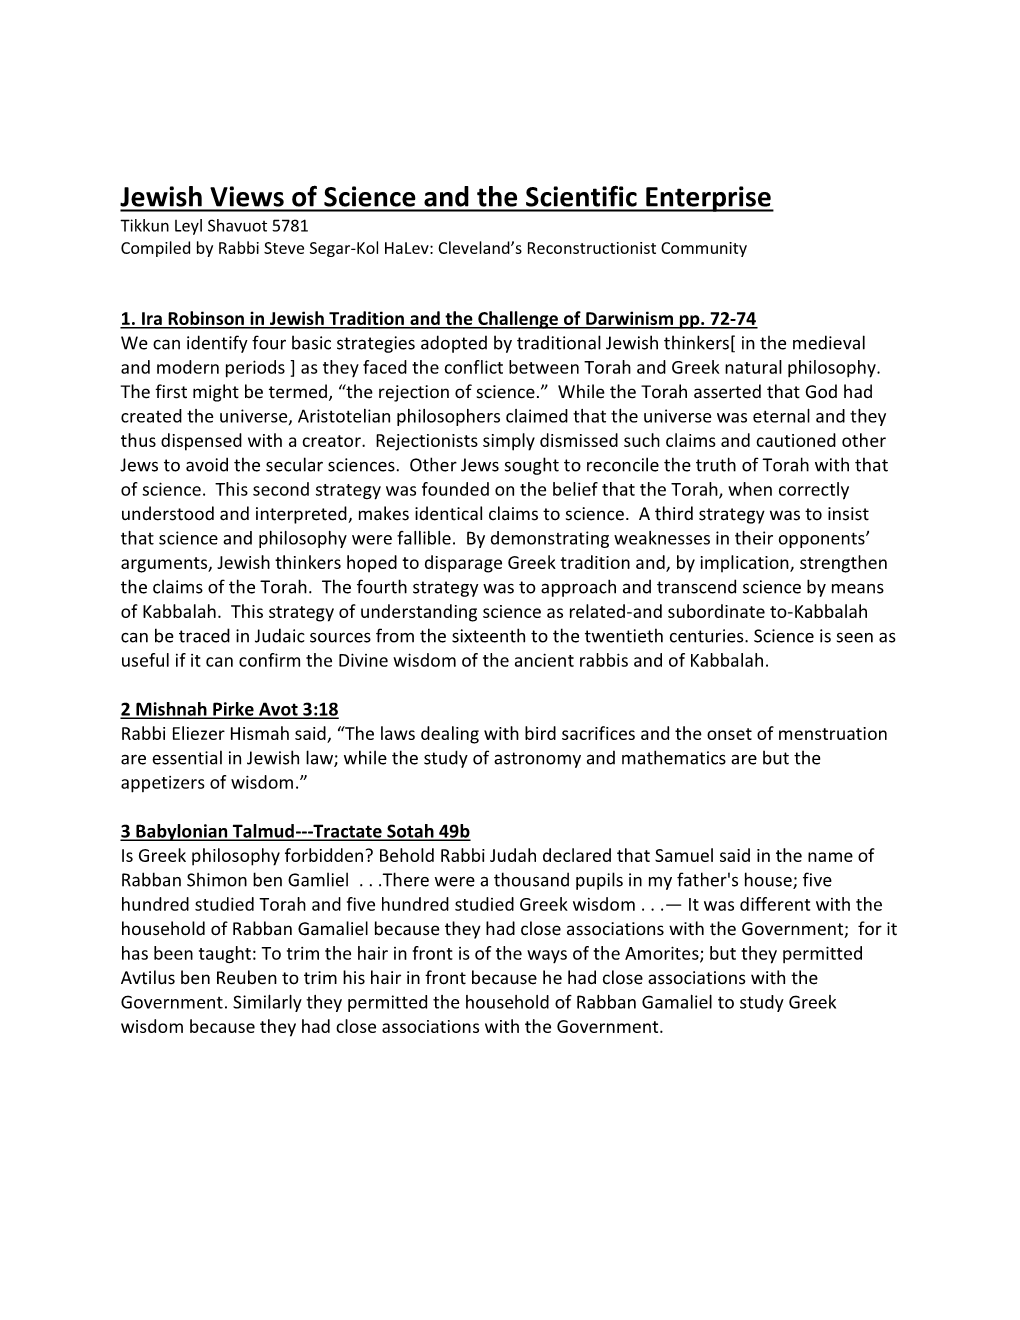 Jewish Views of Science and the Scientific Enterprise Tikkun Leyl Shavuot 5781 Compiled by Rabbi Steve Segar-Kol Halev: Cleveland’S Reconstructionist Community